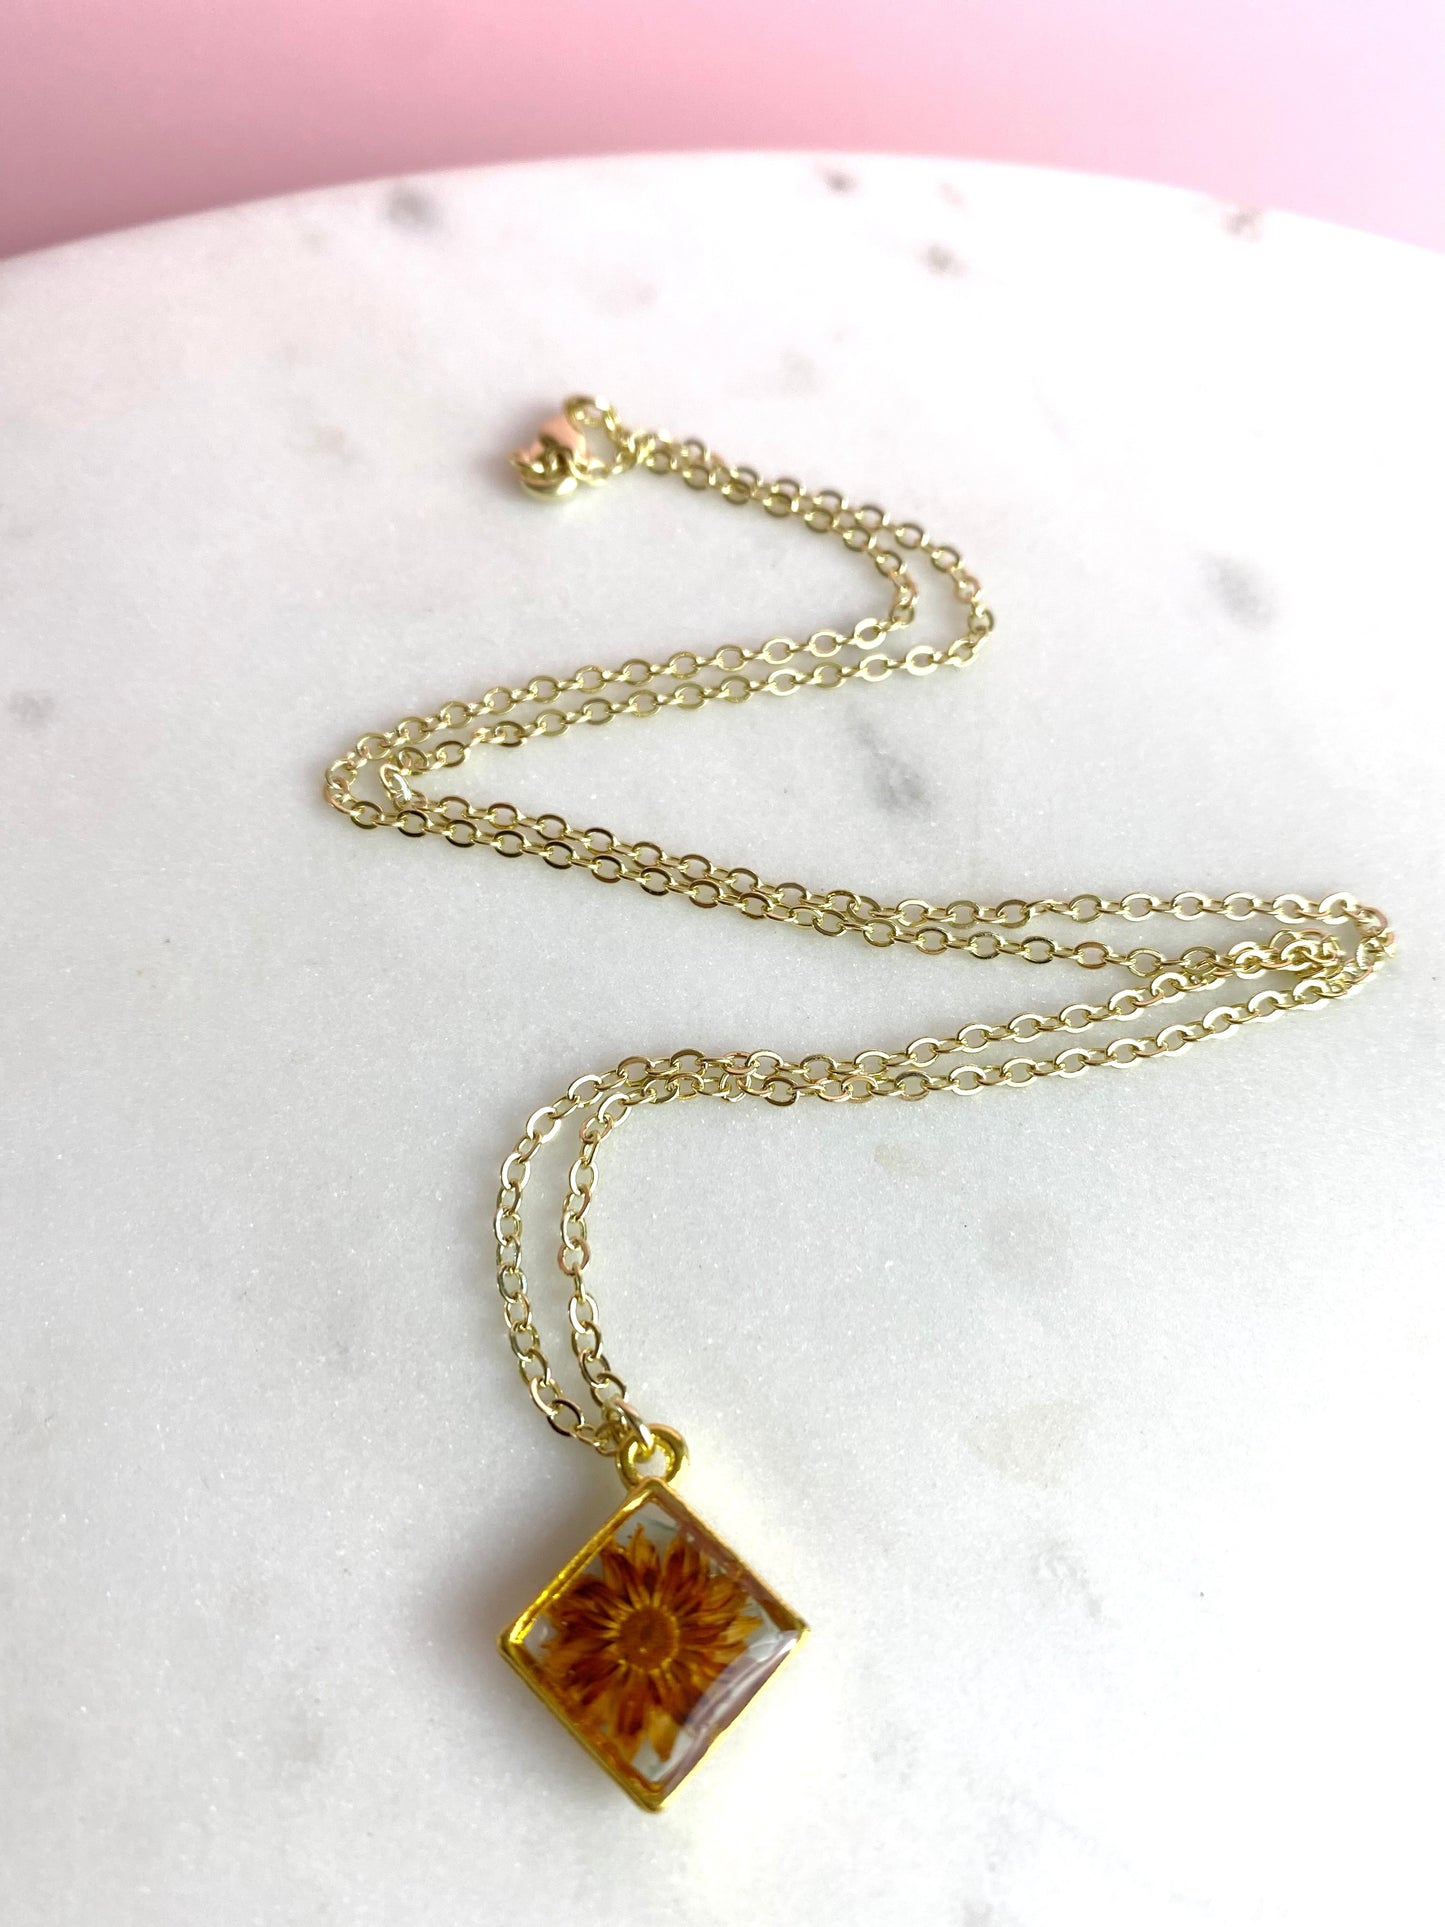 Pressed Flower Necklace | Brown Daisy Diamond | Handmade Jewelry